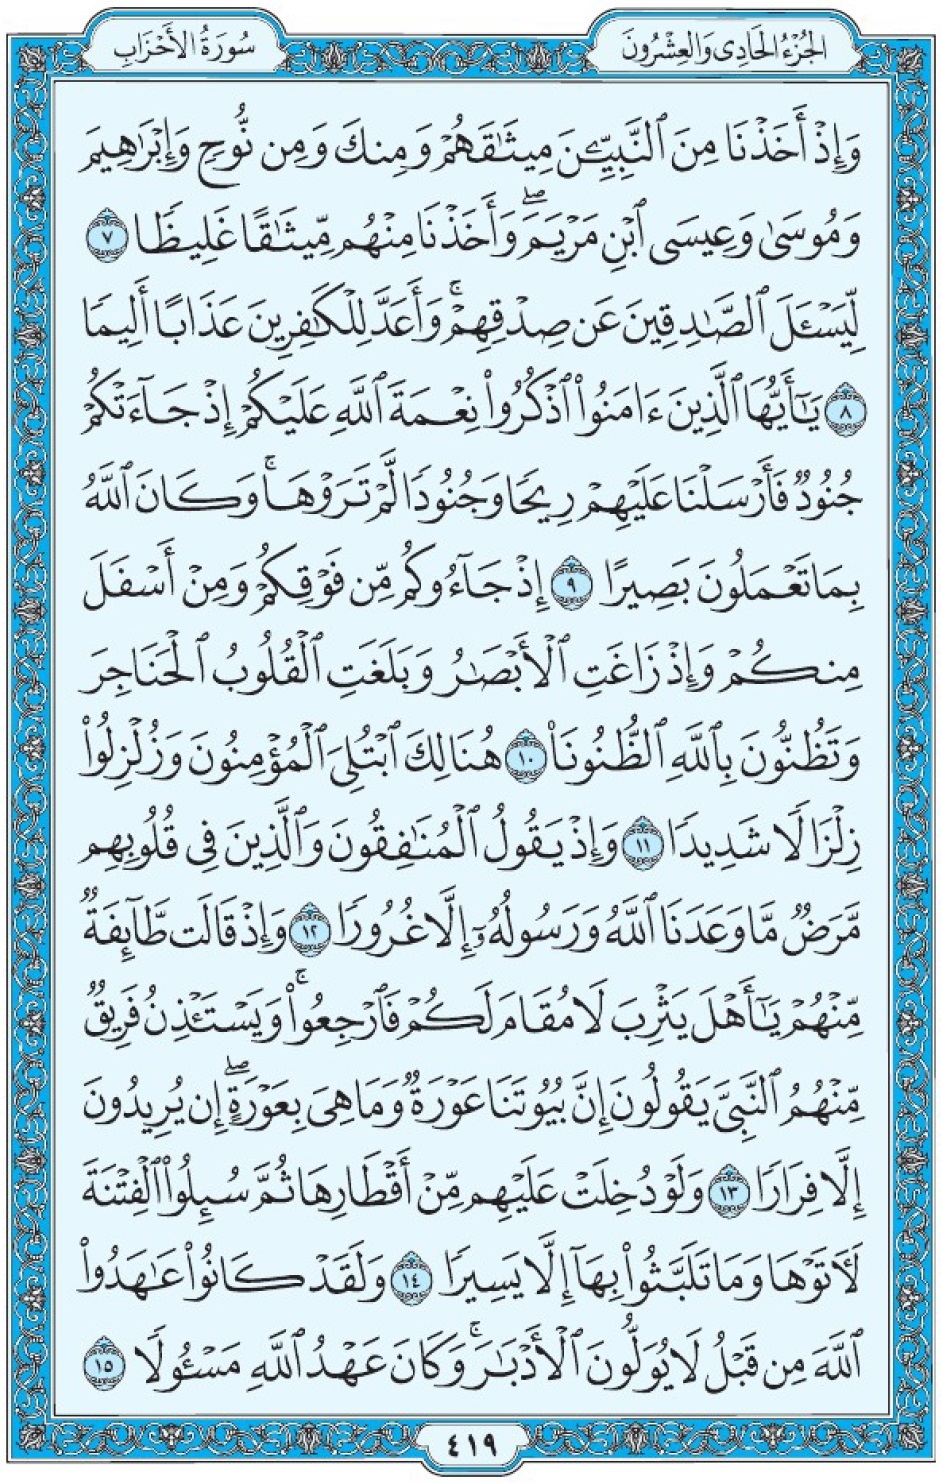 Коран Мединский мусхаф страница 419, Аль-Ахзаб, аят 7-15